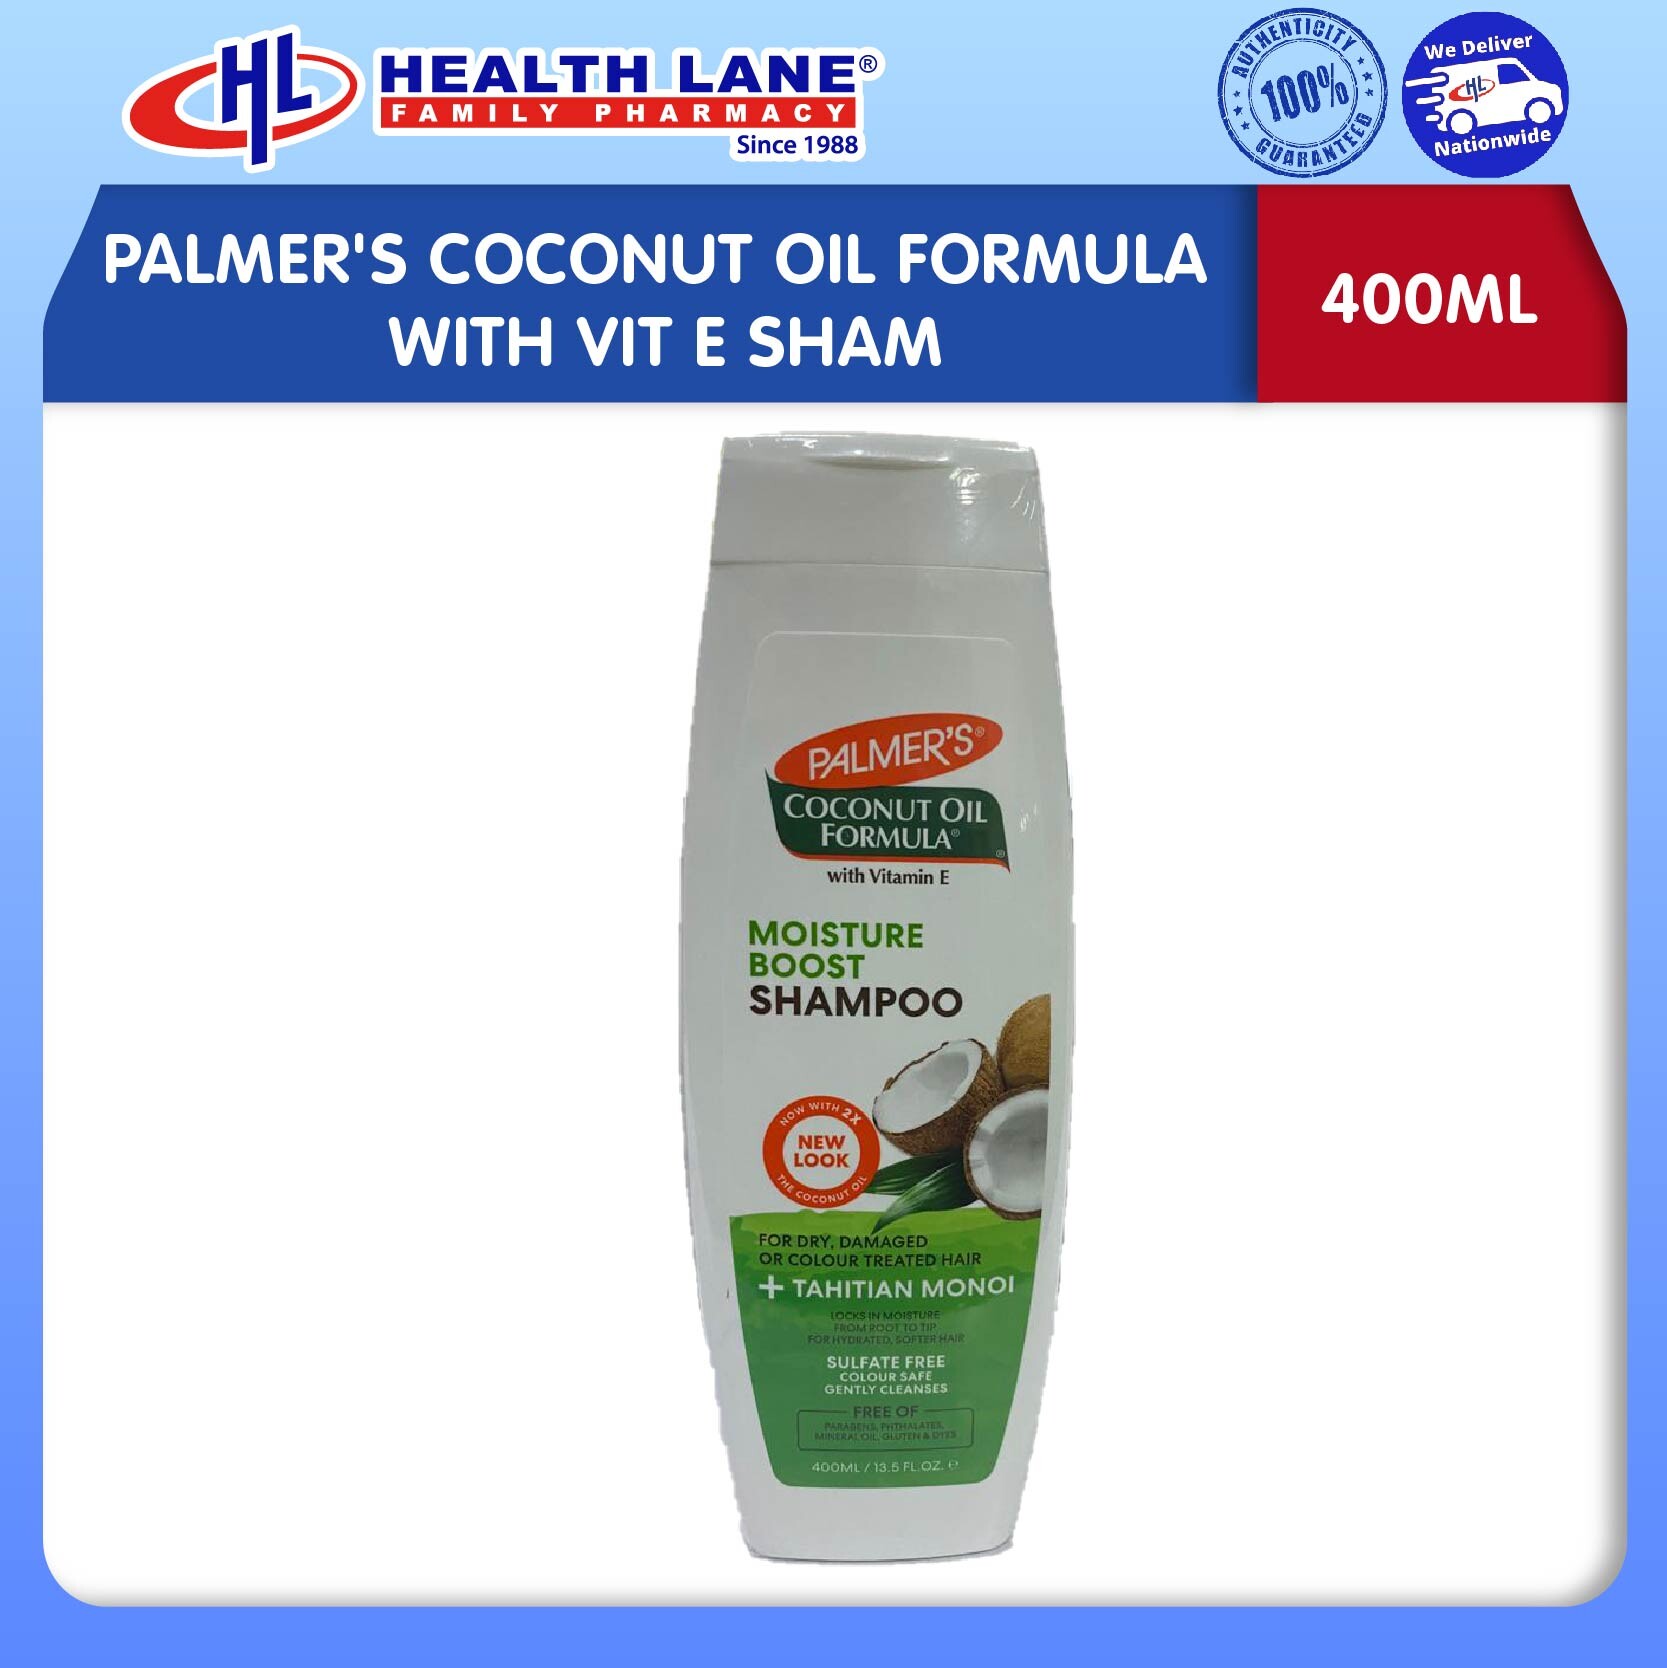 PALMER'S COCONUT OIL FORMULA WITH VIT E SHAMPOO (400ML)